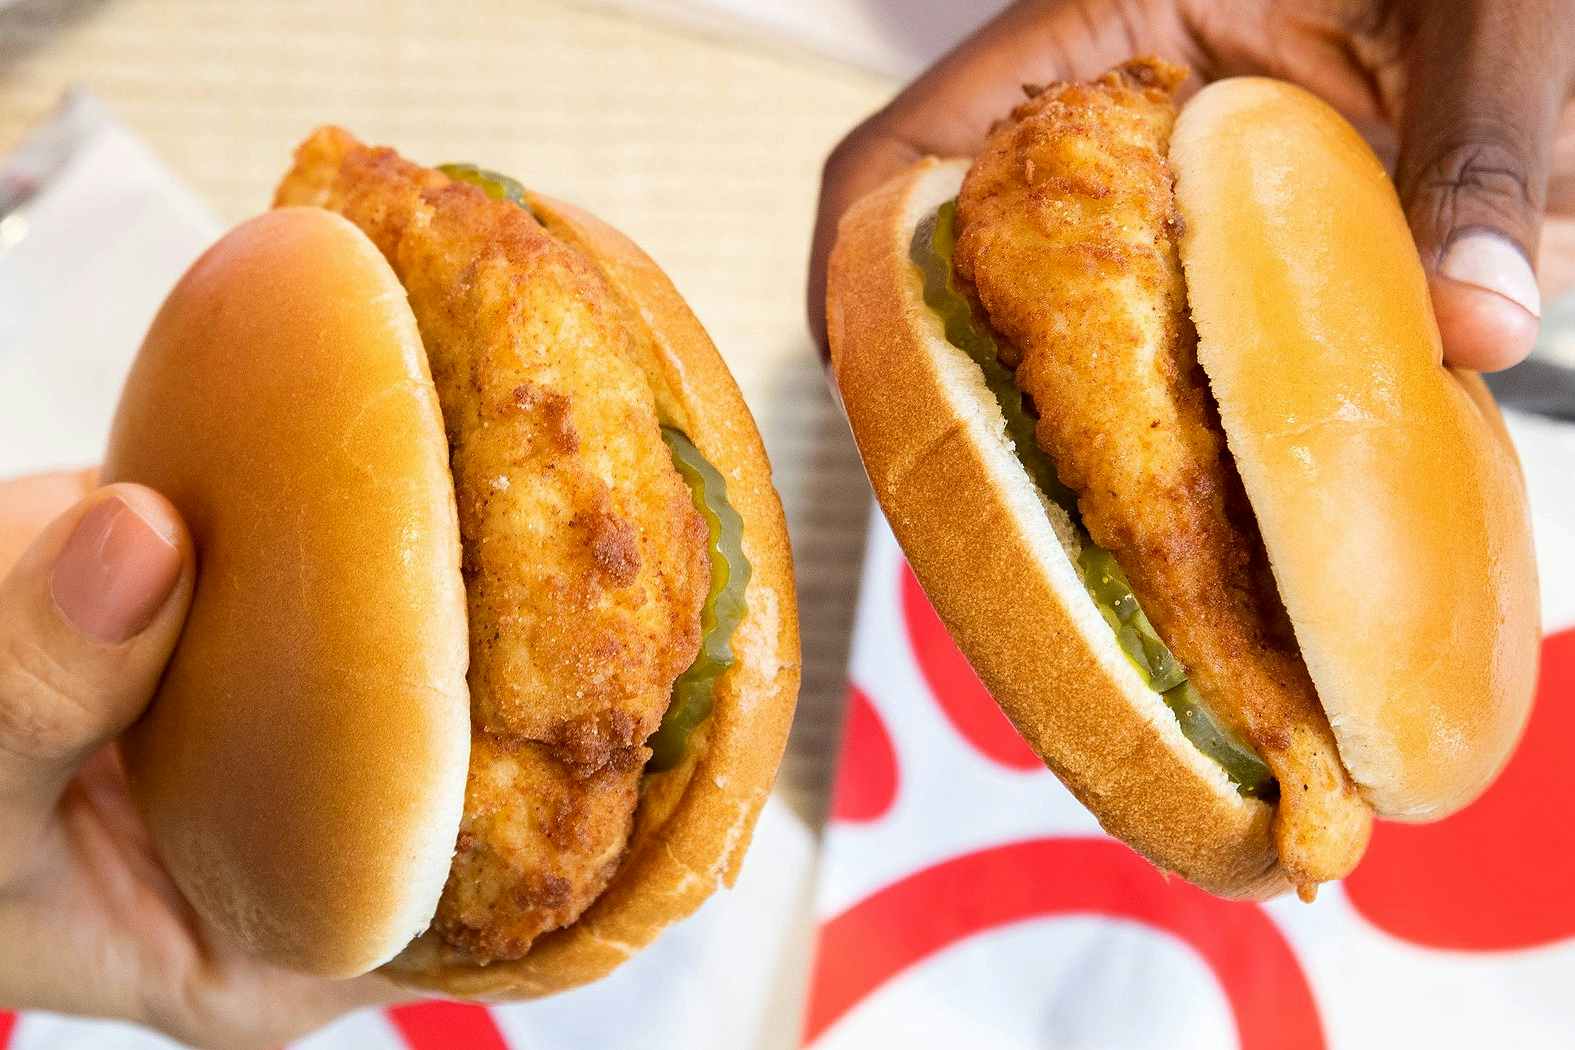 chick-fil-a-original-chicken-sandwiches-hands-feature